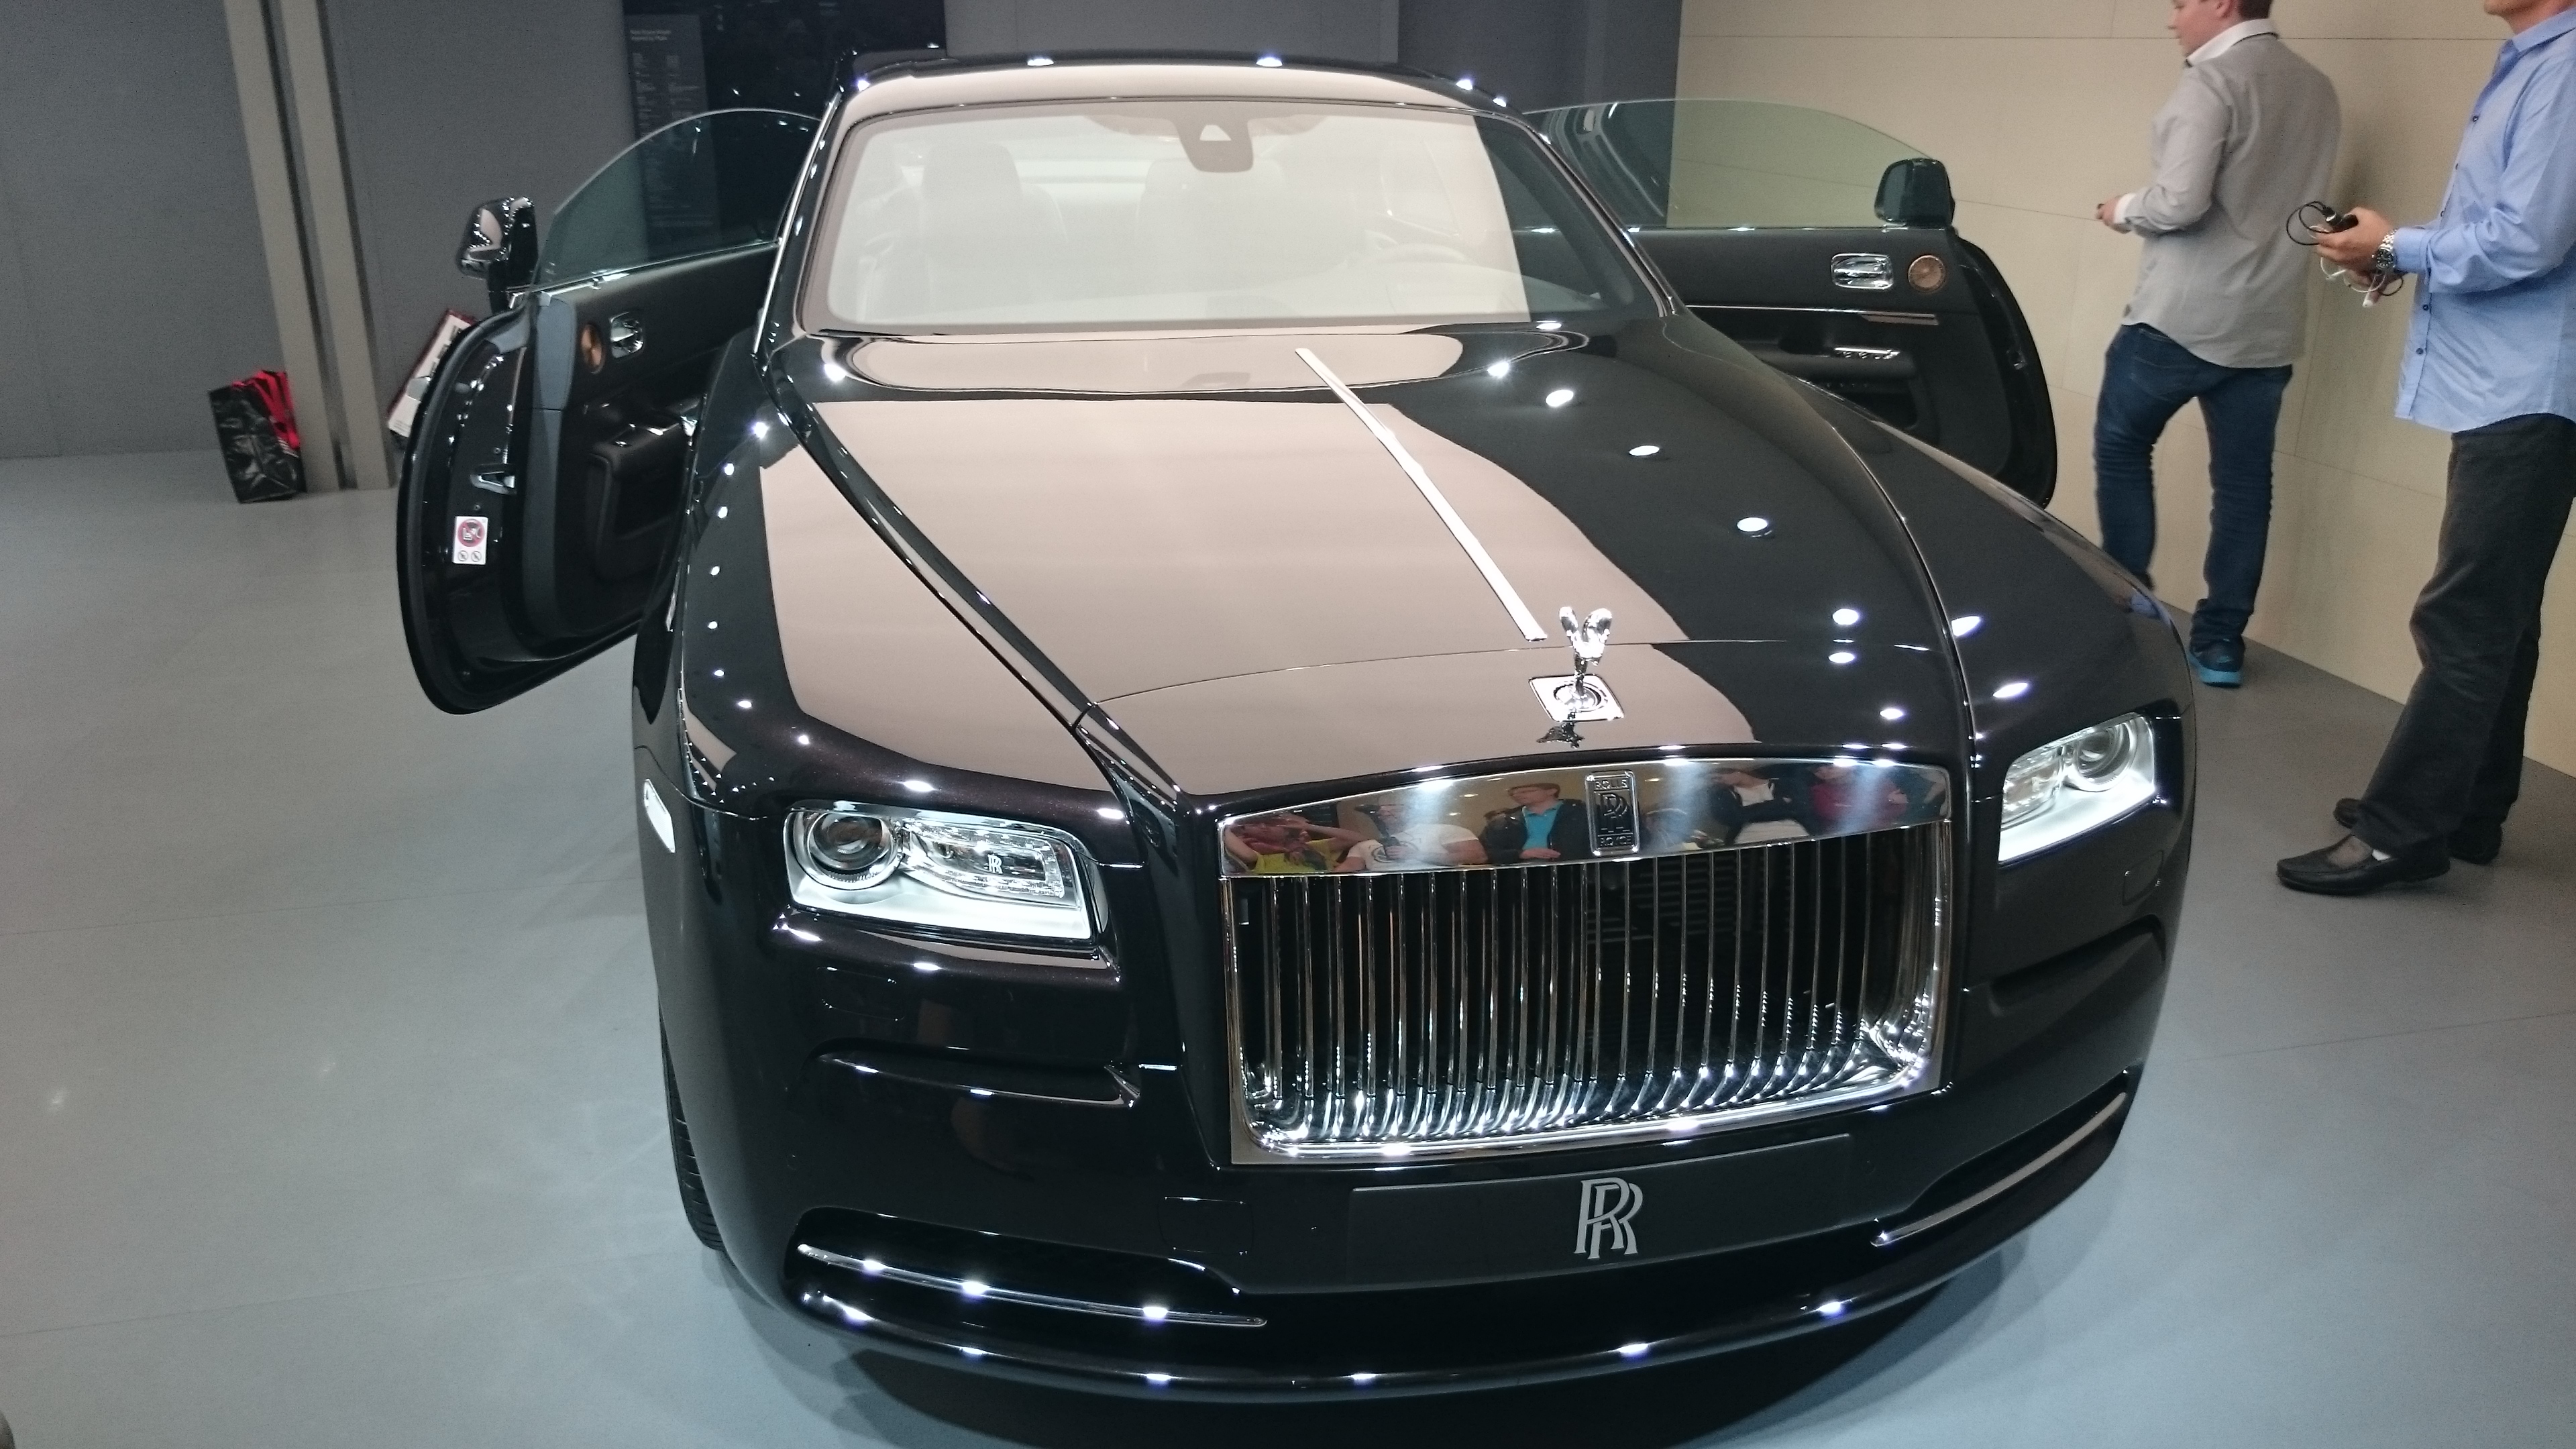 Fotos 360 del Rolls Royce Wraith ‘Inspired by Music’ #VidePan en #IAA2015